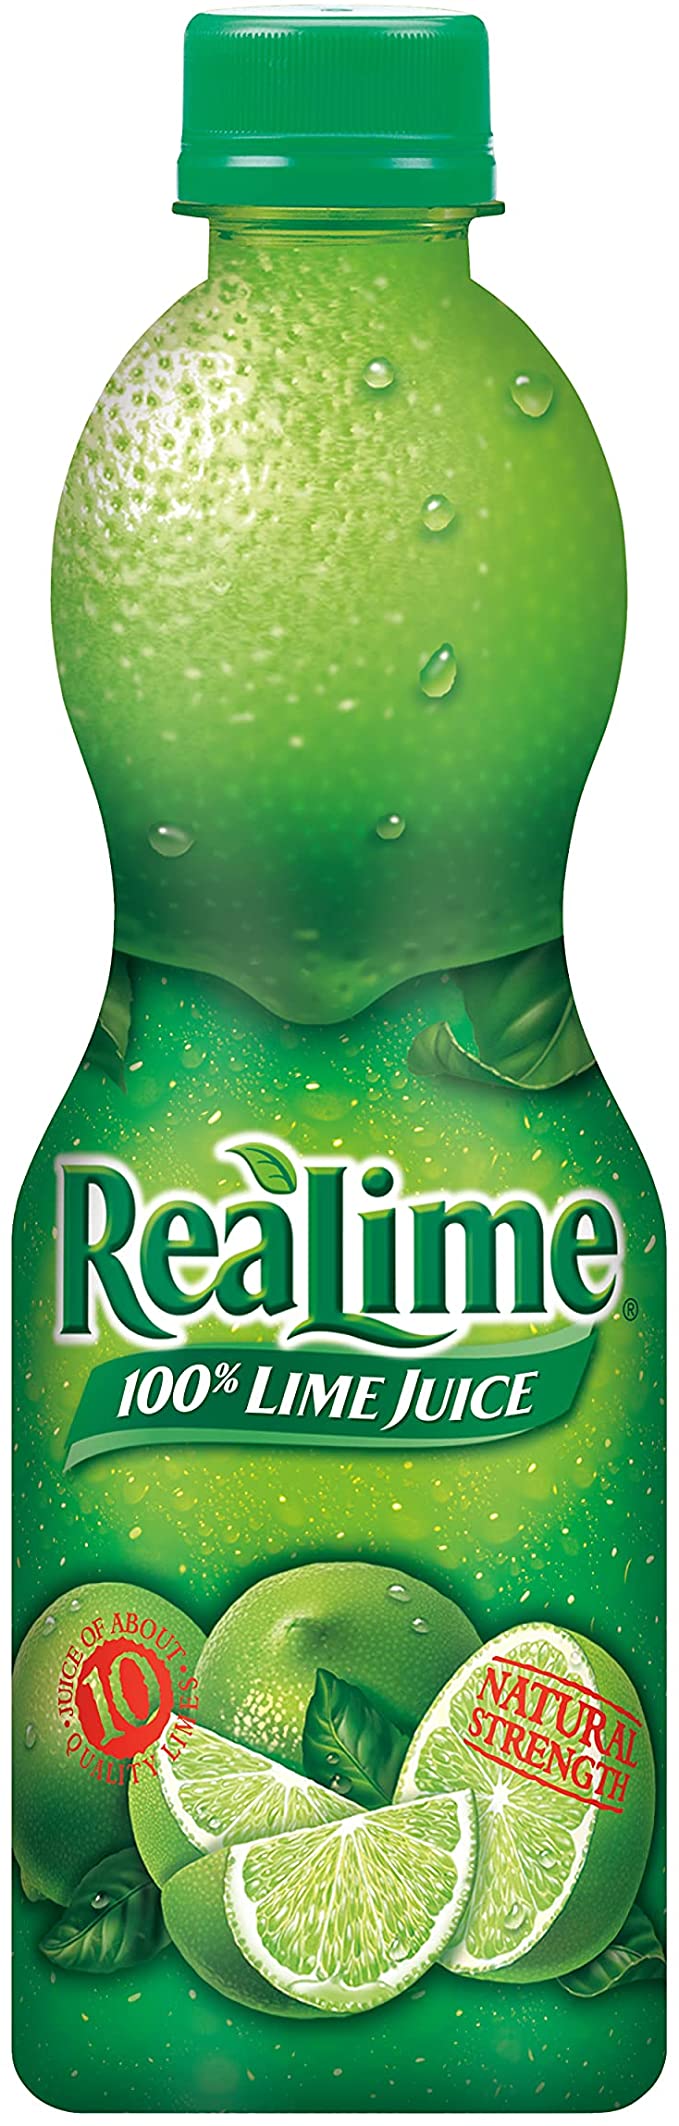 Realime - Lime Juice 12x440ml